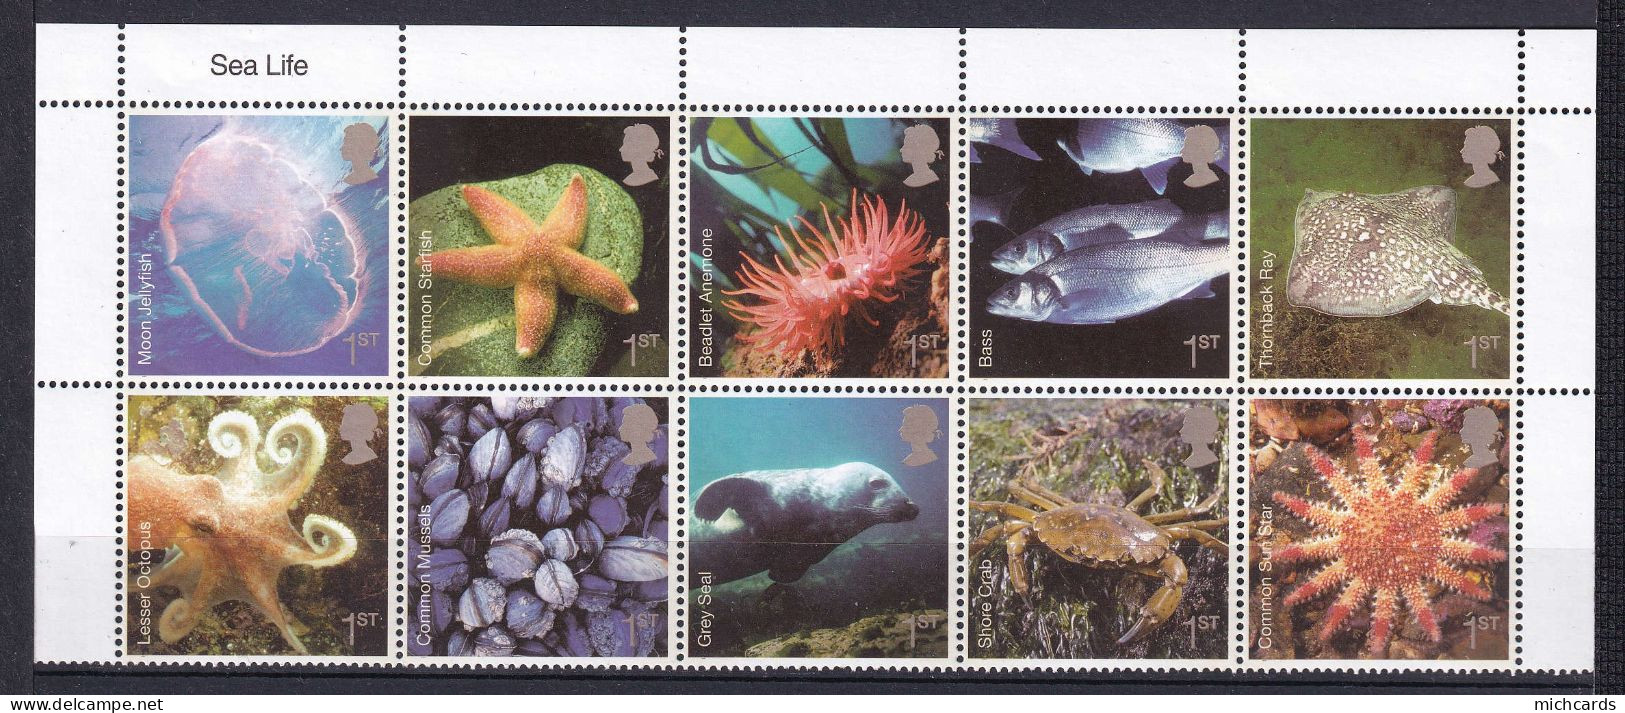 194 GRANDE BRETAGNE 2007 - Y&T 2837/46 - Meduse Anemone Poisson Moule Crabe Phoque - Neuf ** (MNH) Sans Charniere - Unused Stamps